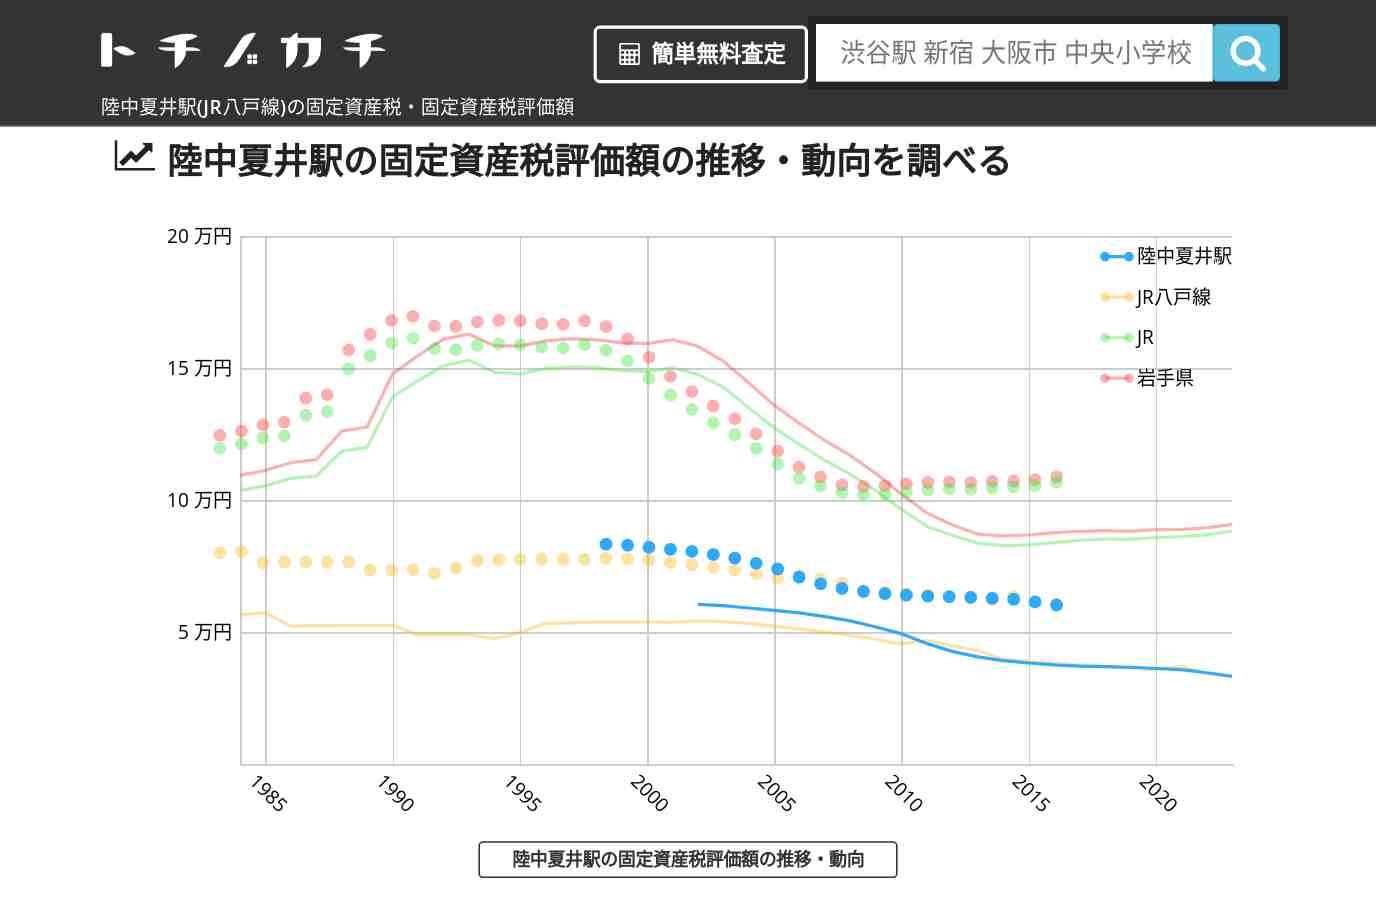 陸中夏井駅(JR八戸線)の固定資産税・固定資産税評価額 | トチノカチ